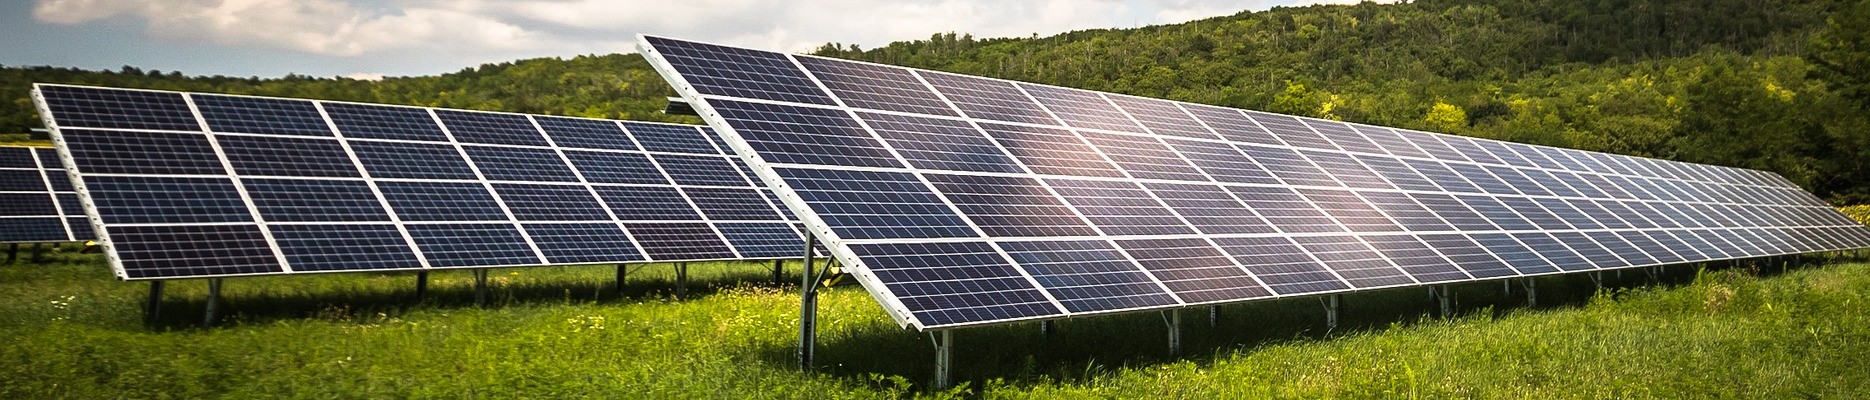 Community-owned renewable energy in local economy